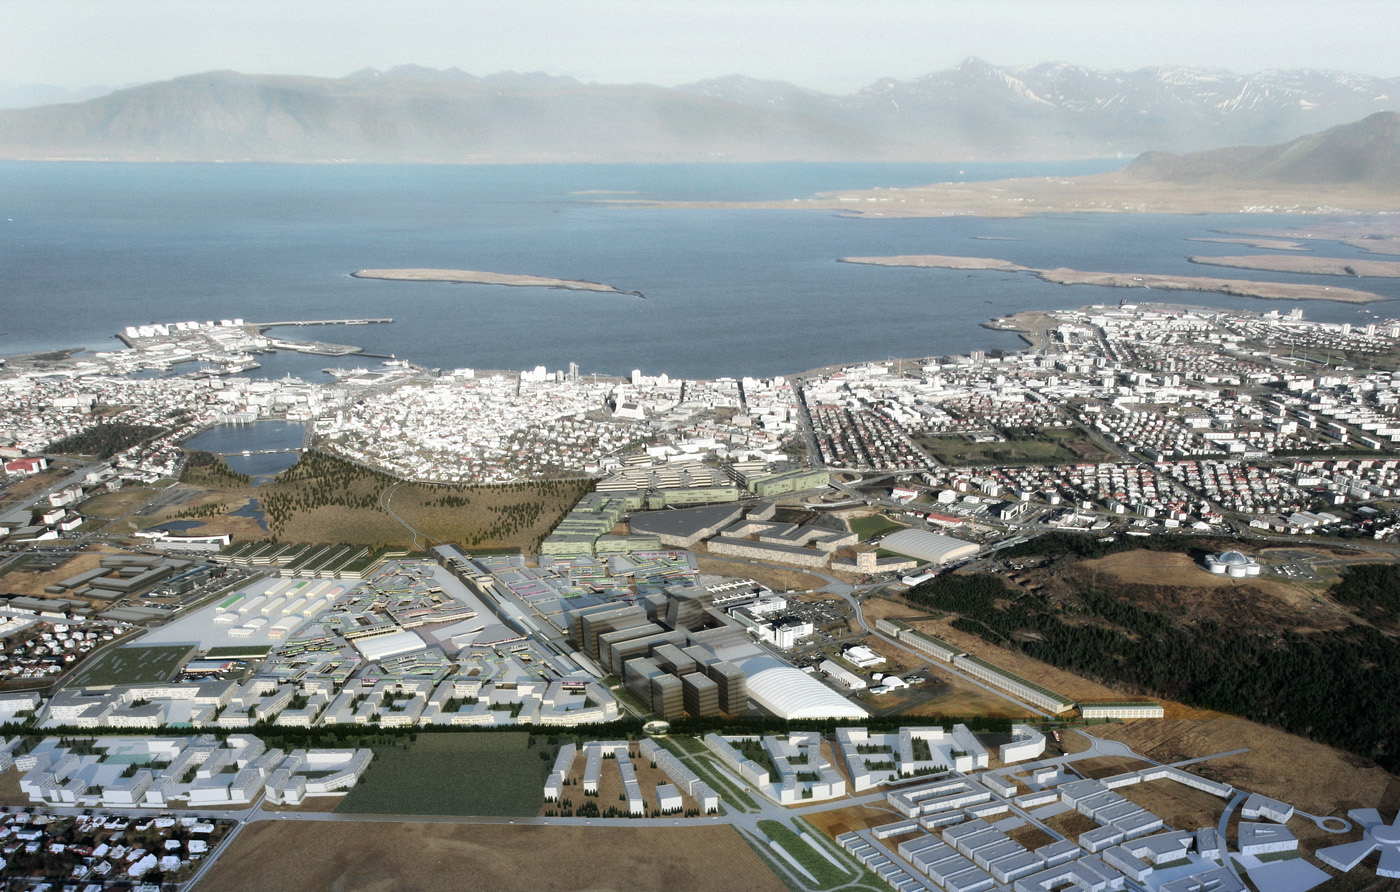  Overview of Vatnsmýri with downtown Reykjavík &nbsp; &nbsp; &nbsp;(image: Studio AMD) 